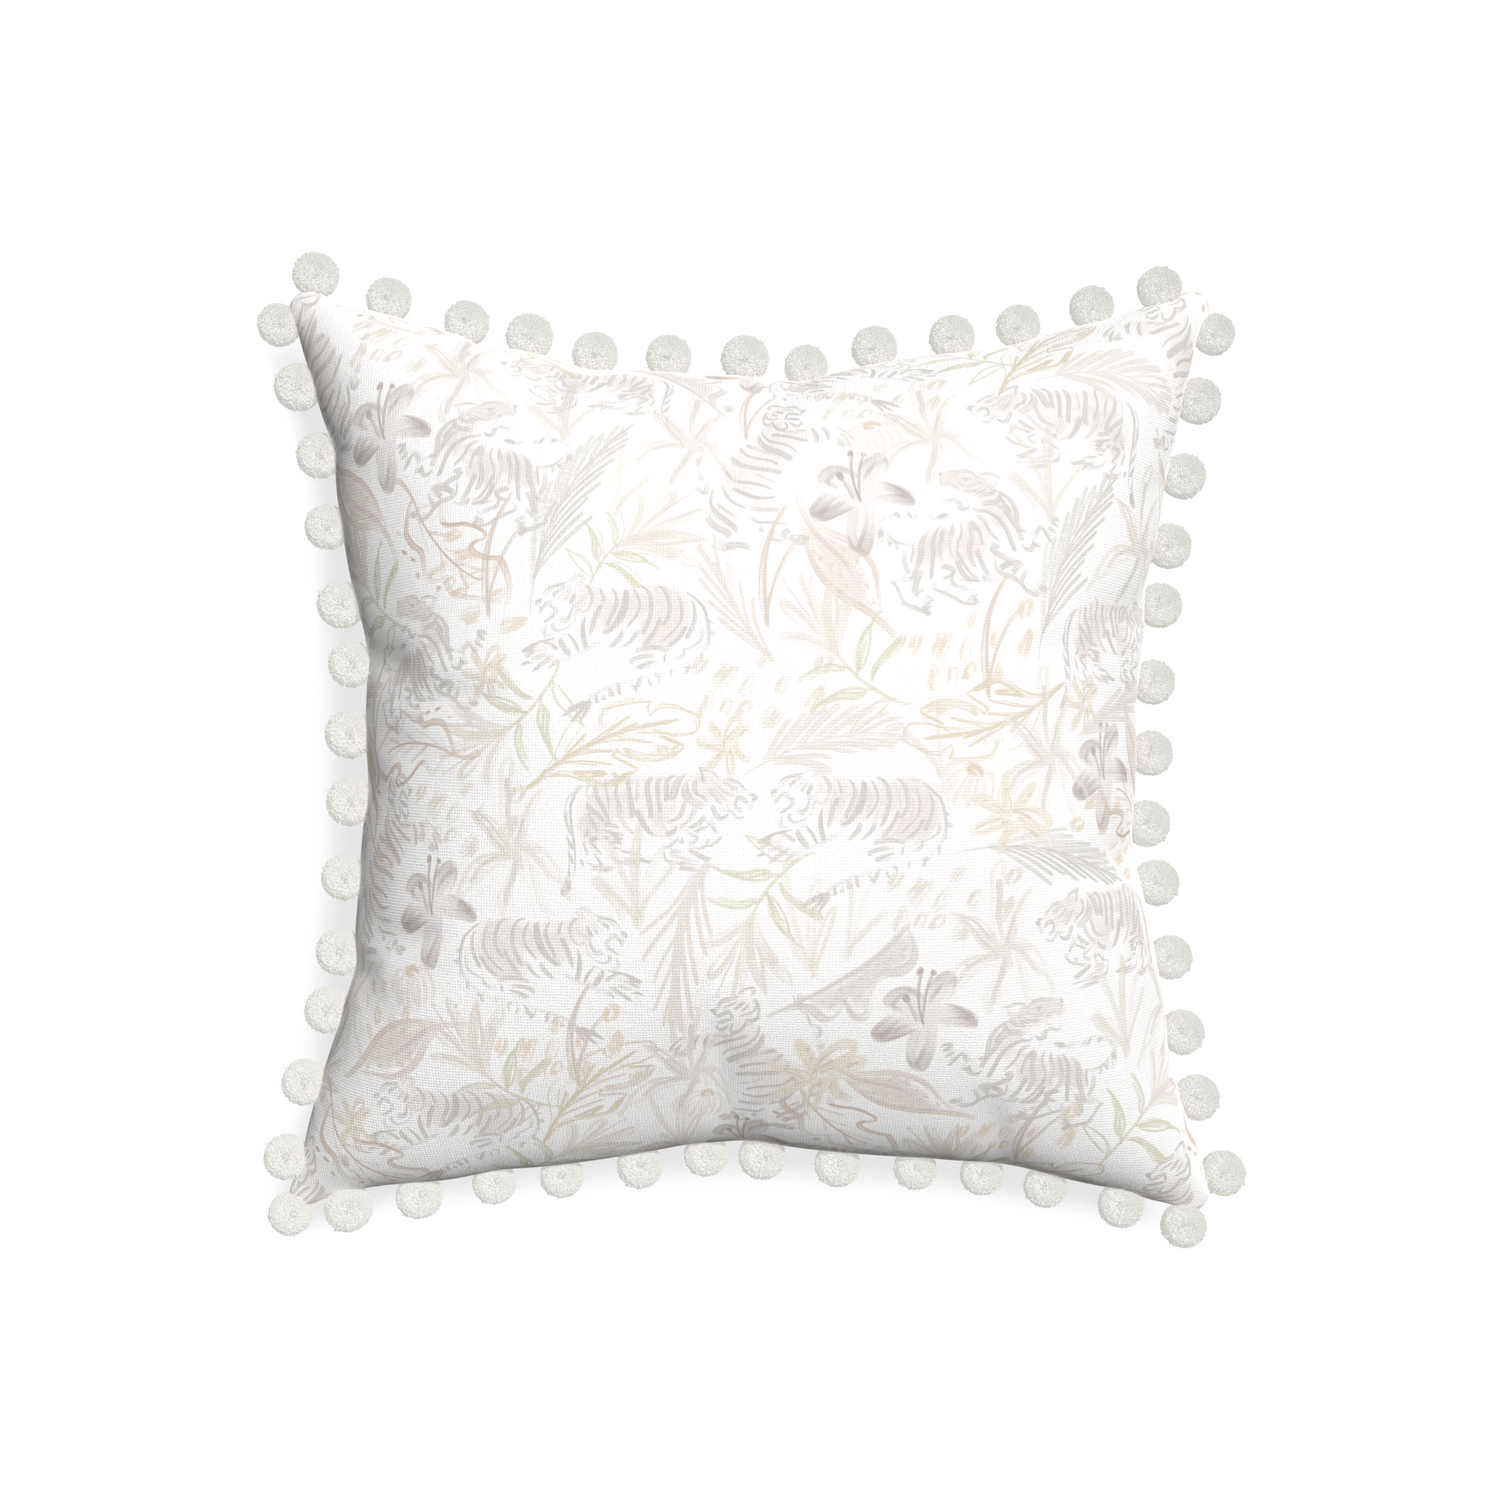 20-square frida sand custom pillow with snow pom pom on white background